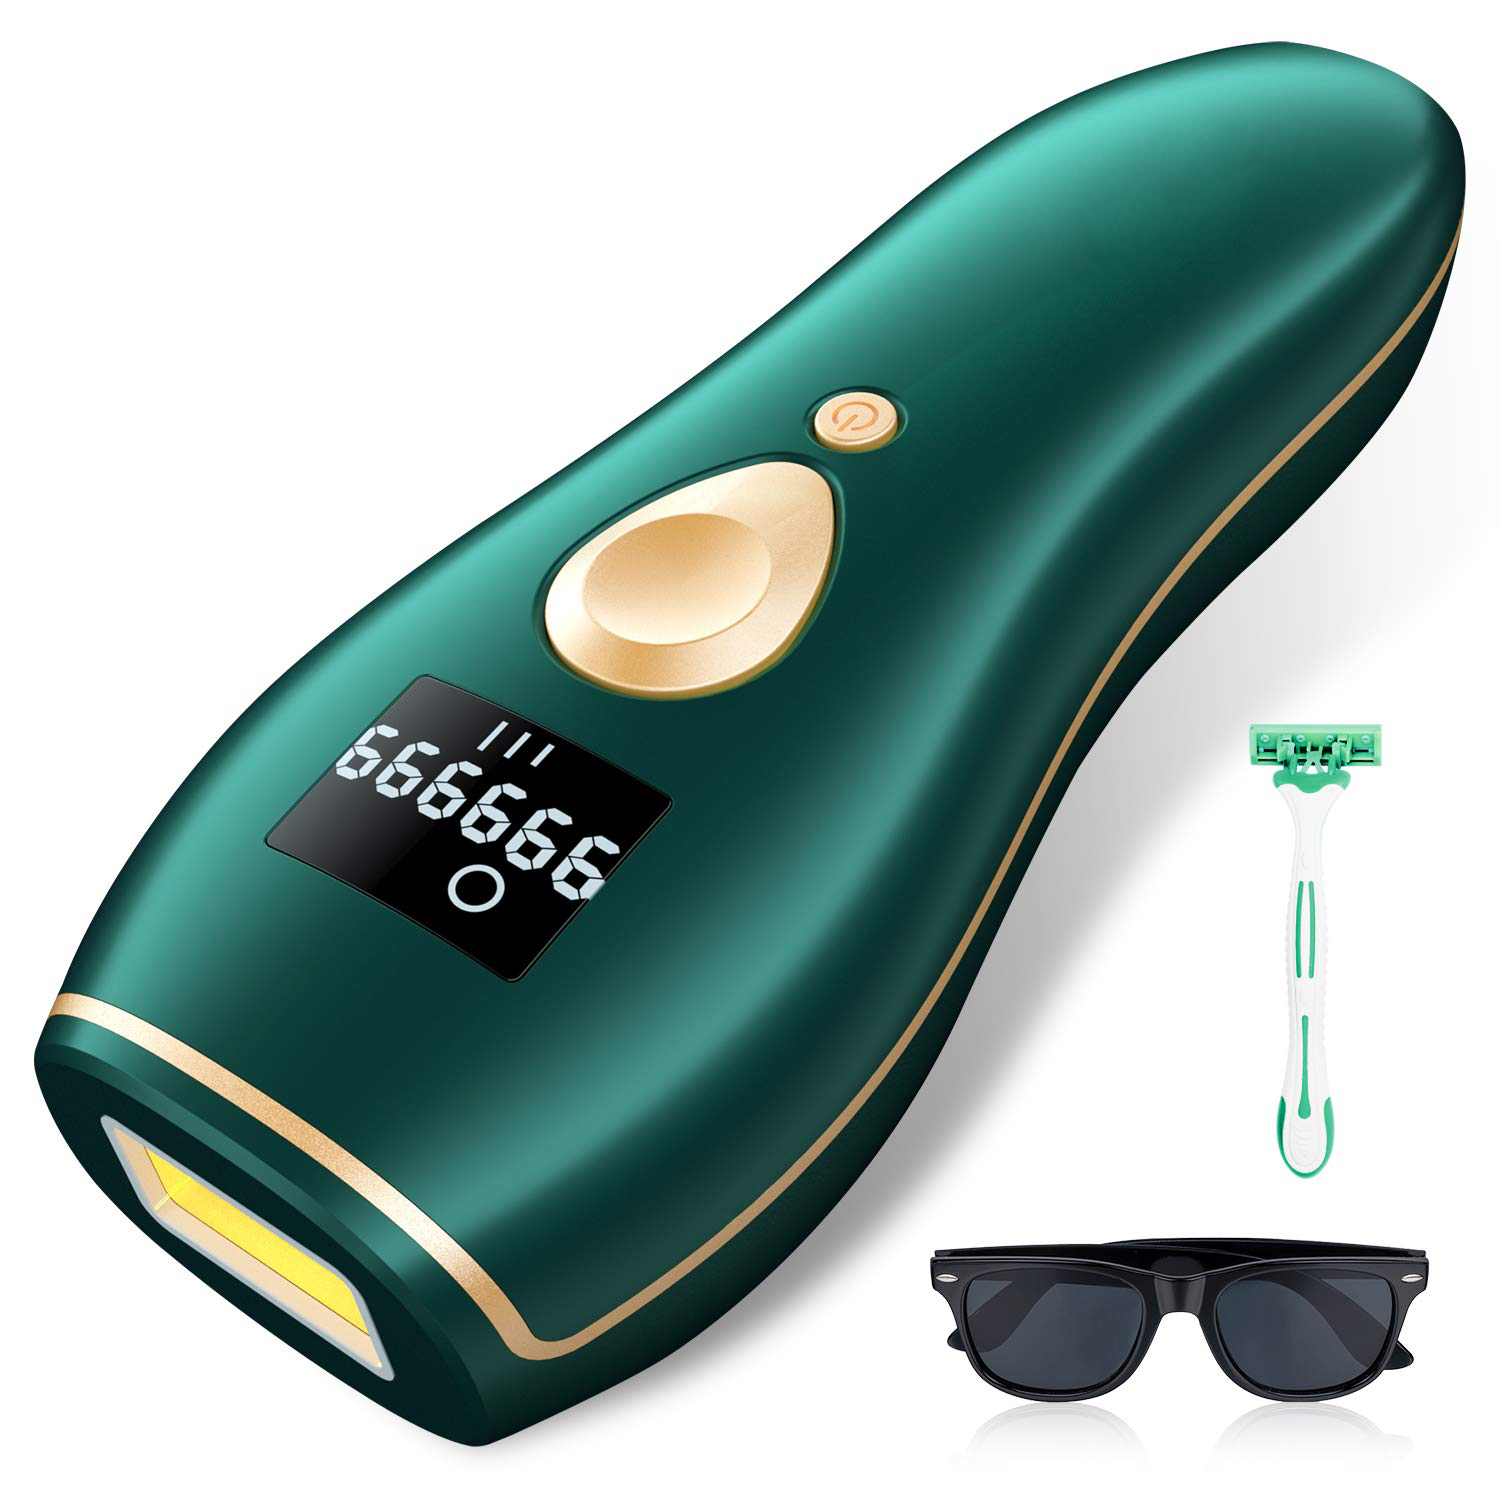 Portable hair remover ipl permanent hair removal Epilator Laser